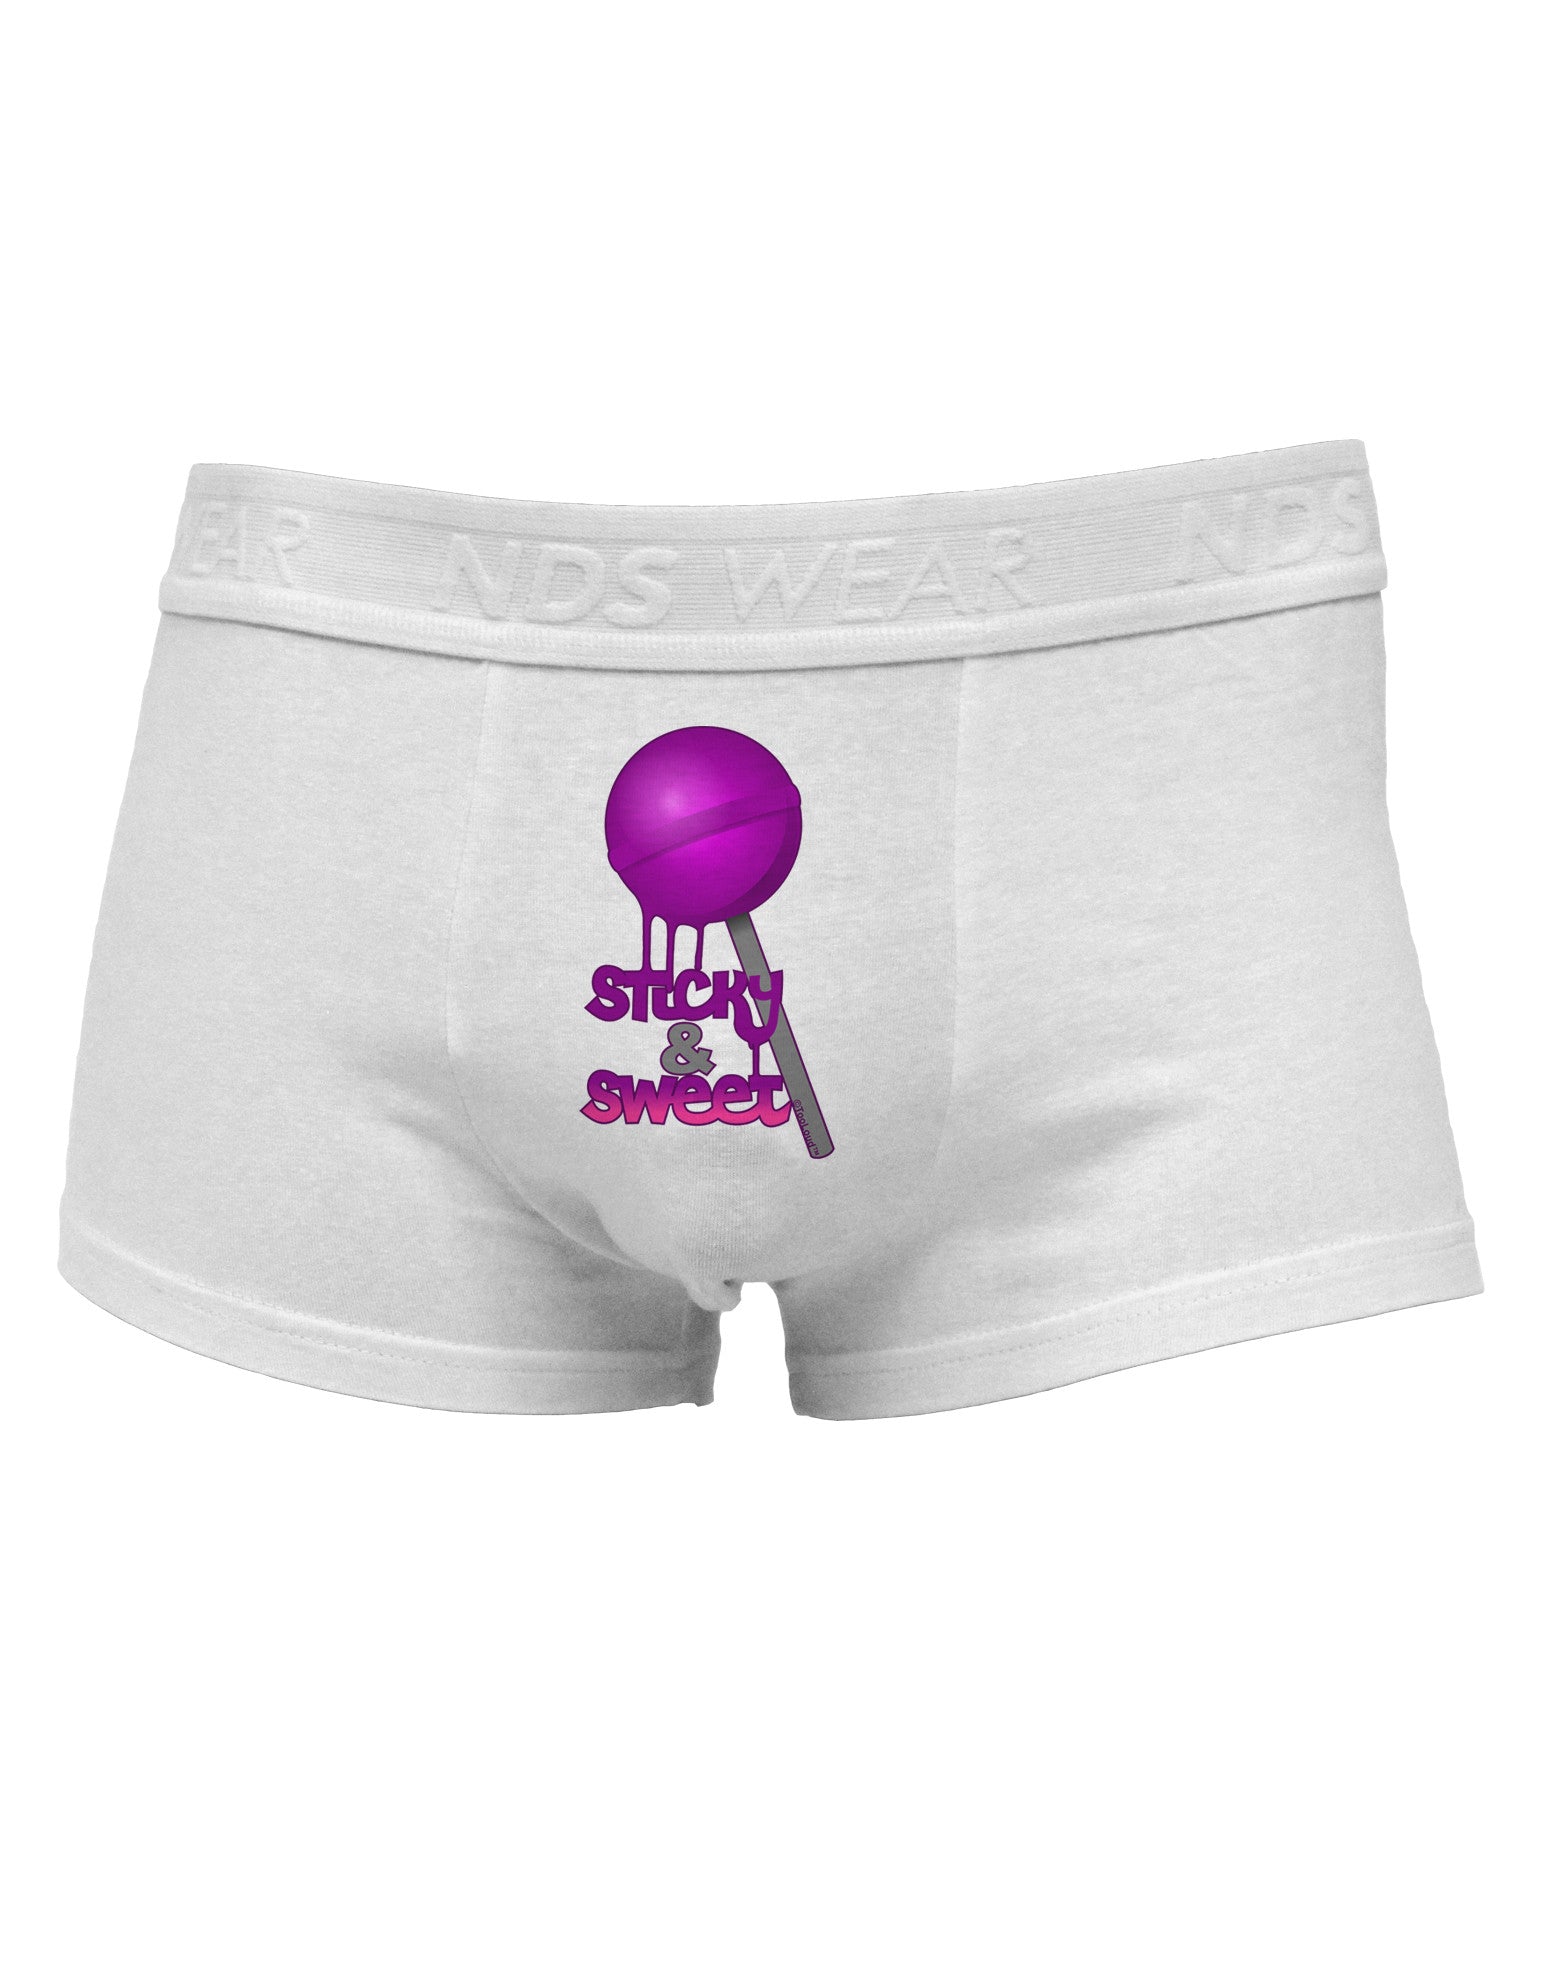 Sticky & Sweet Lollipop Mens Cotton Trunk Underwear